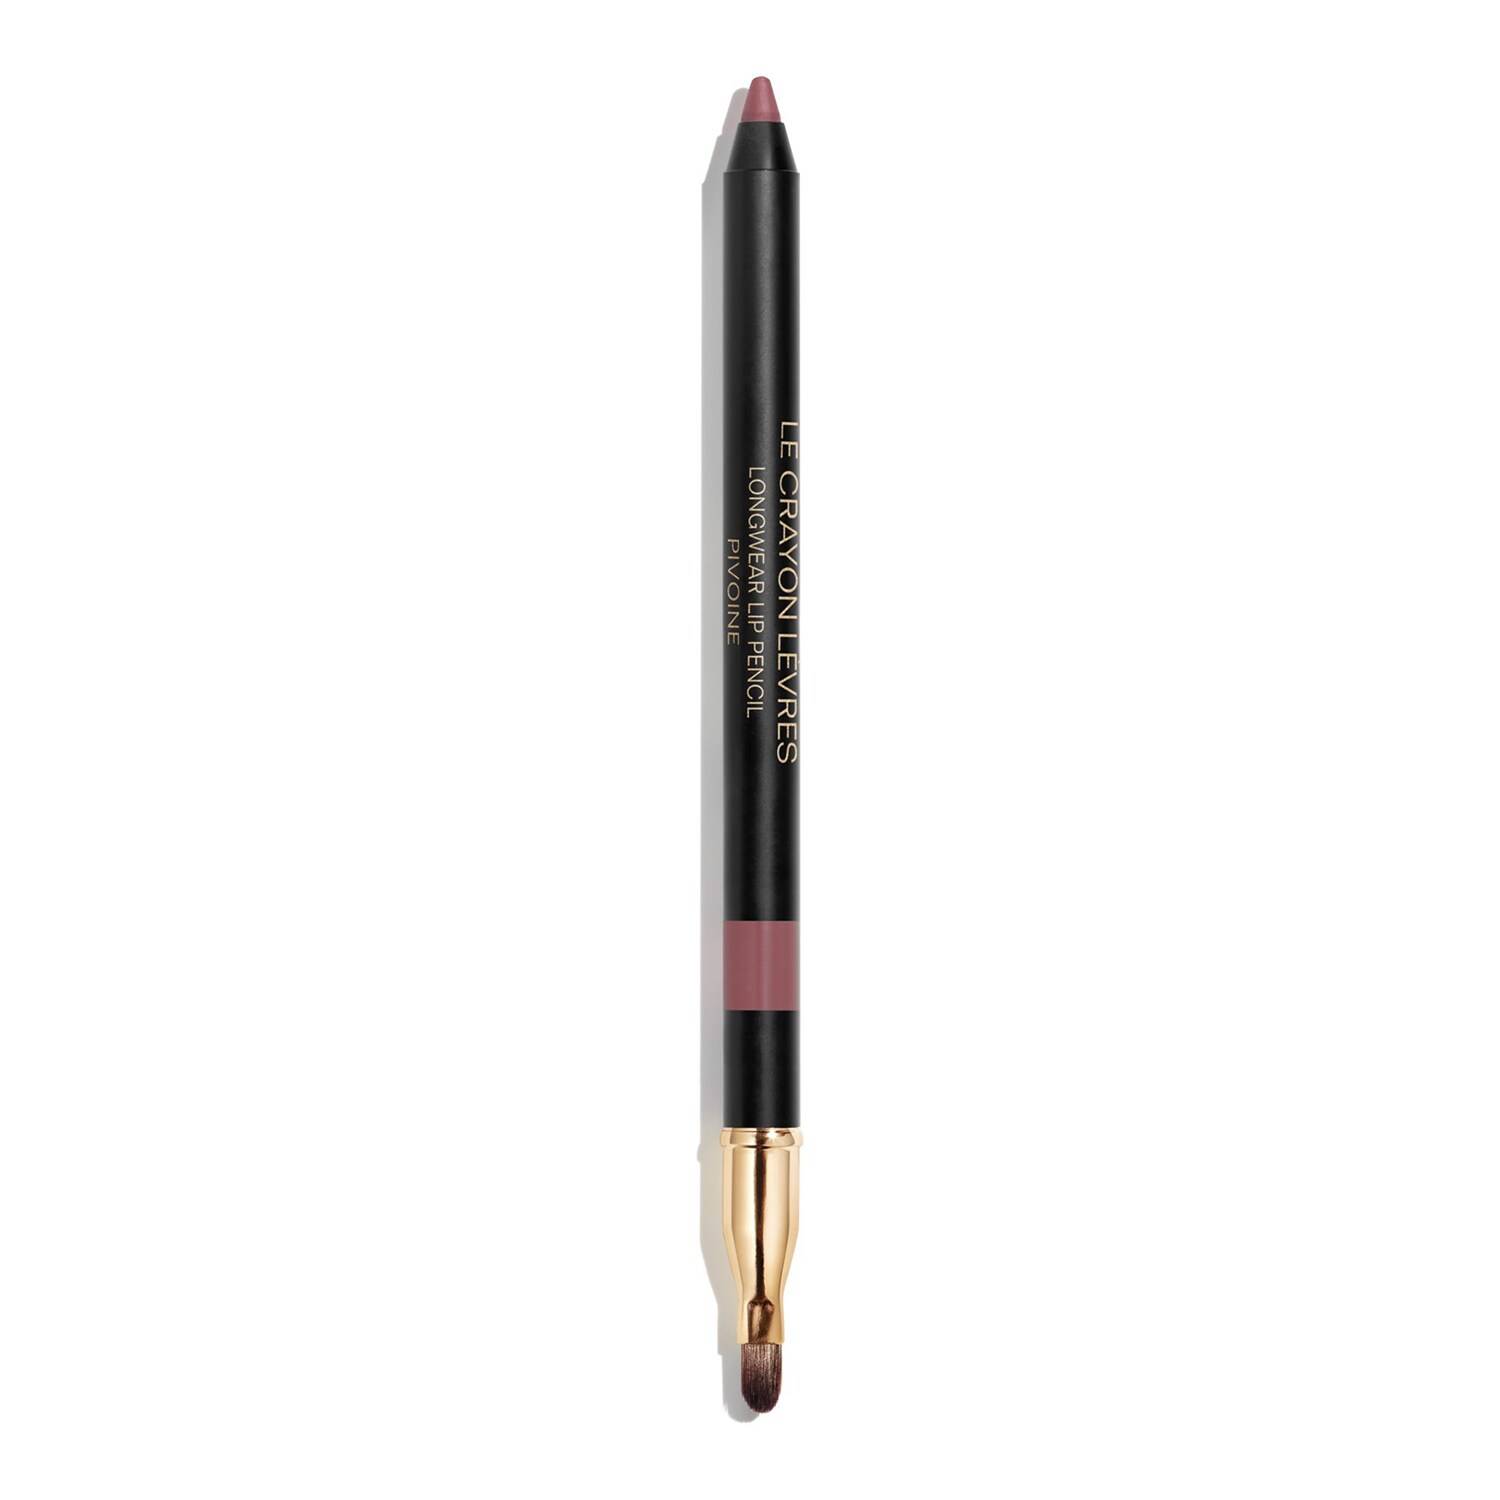 Chanel Le Crayon Levres - Longwear Lip Pencil 164 Pivoine